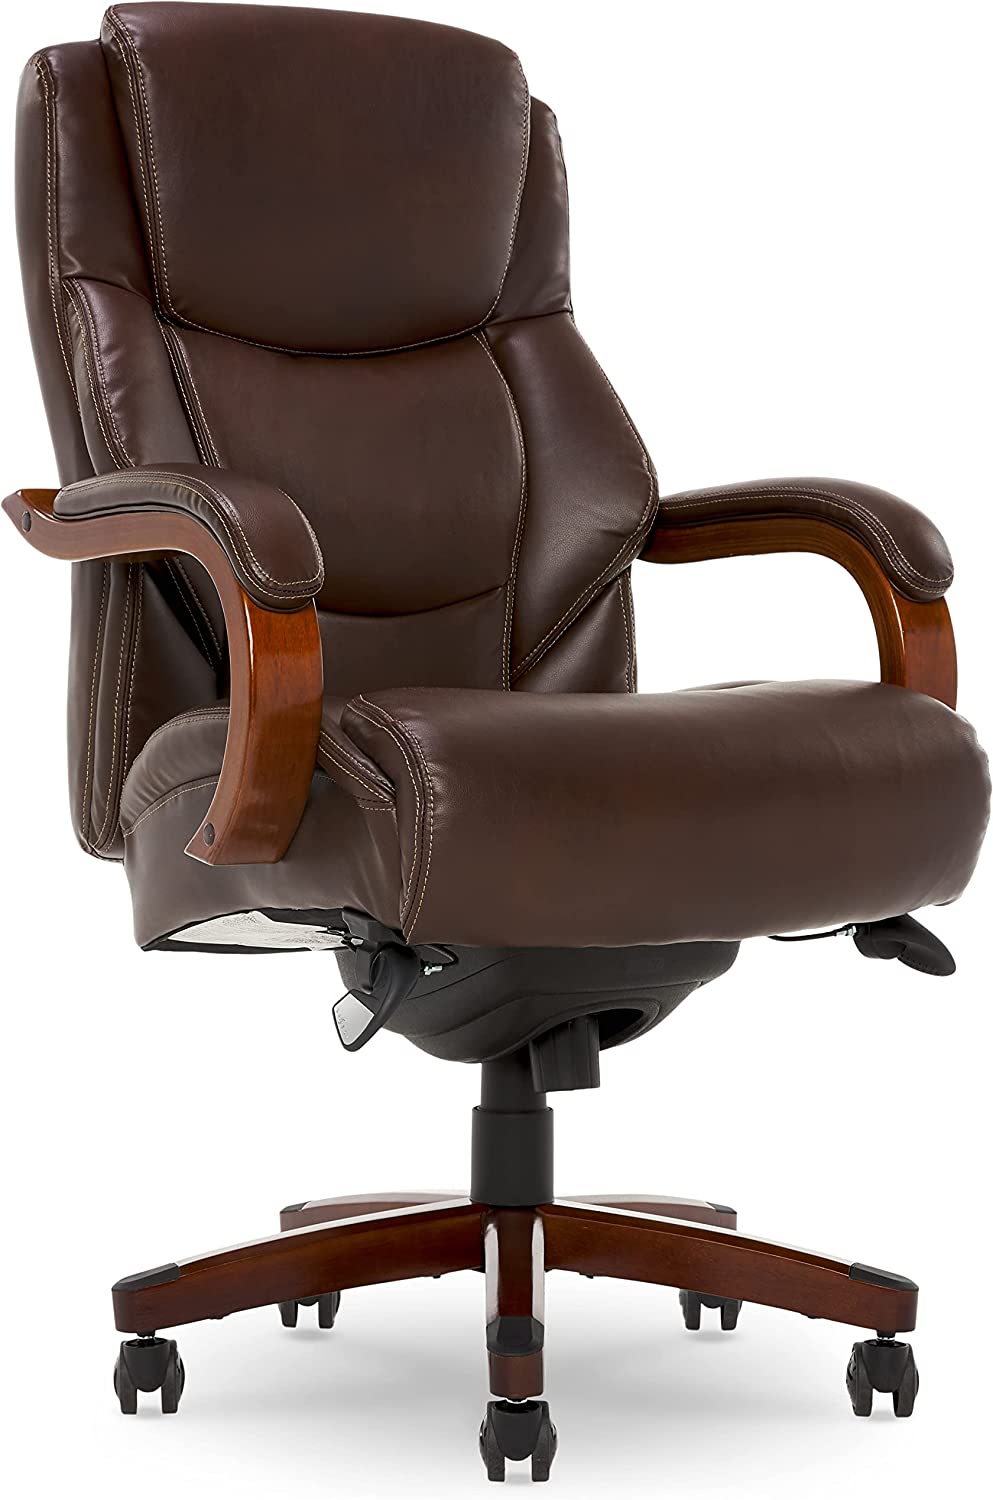 La-Z-Boy Big & Tall Adjustable Executive Desk Chair